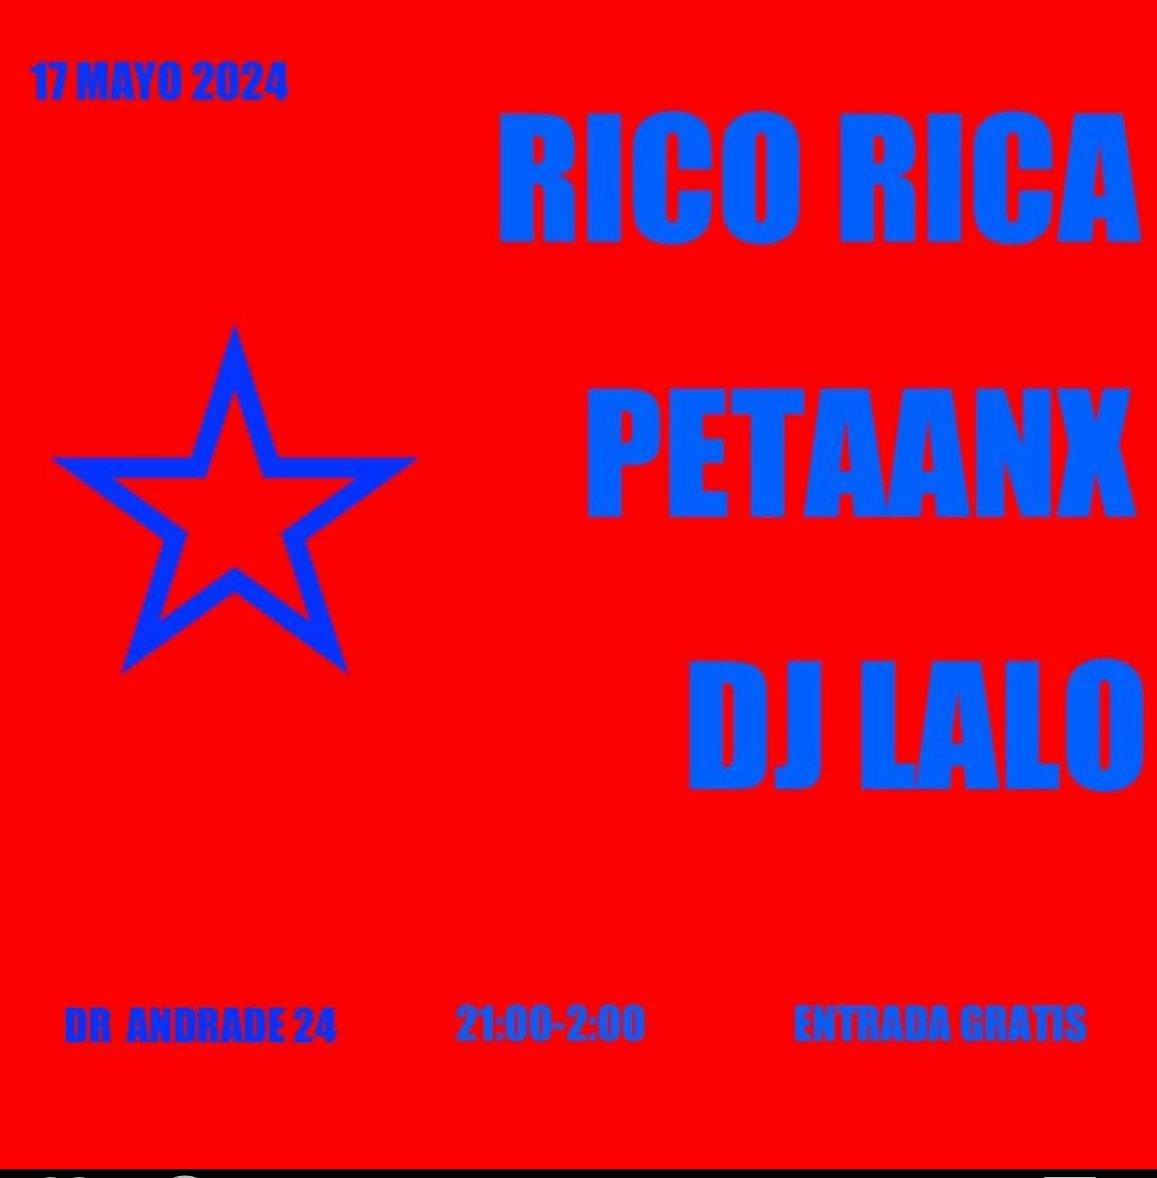 Rico Rica, Petaanx, Dj Lalo - フライヤー表